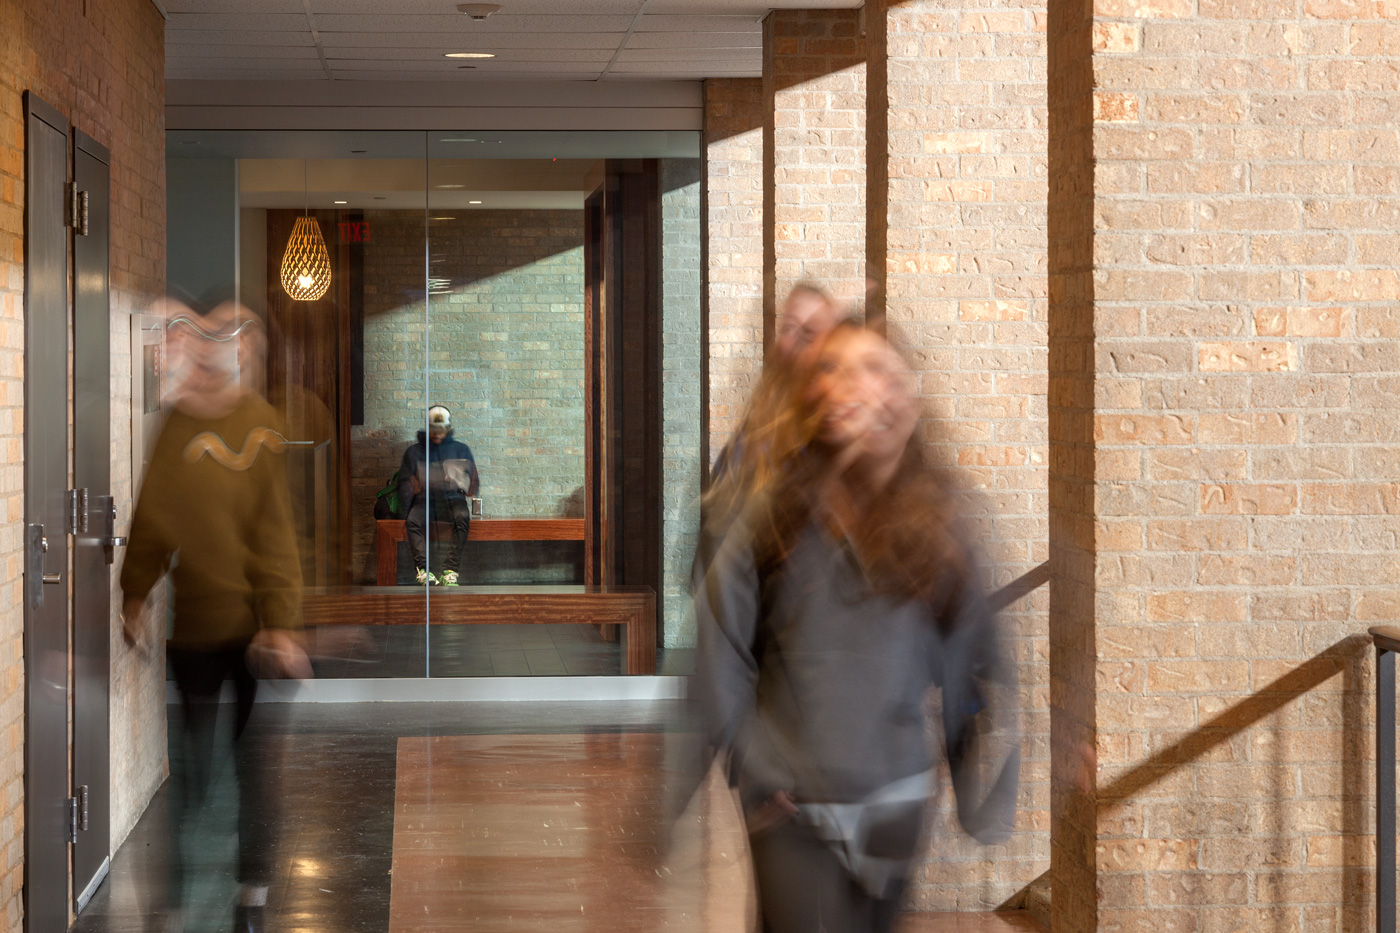 Students walking down a hallway.